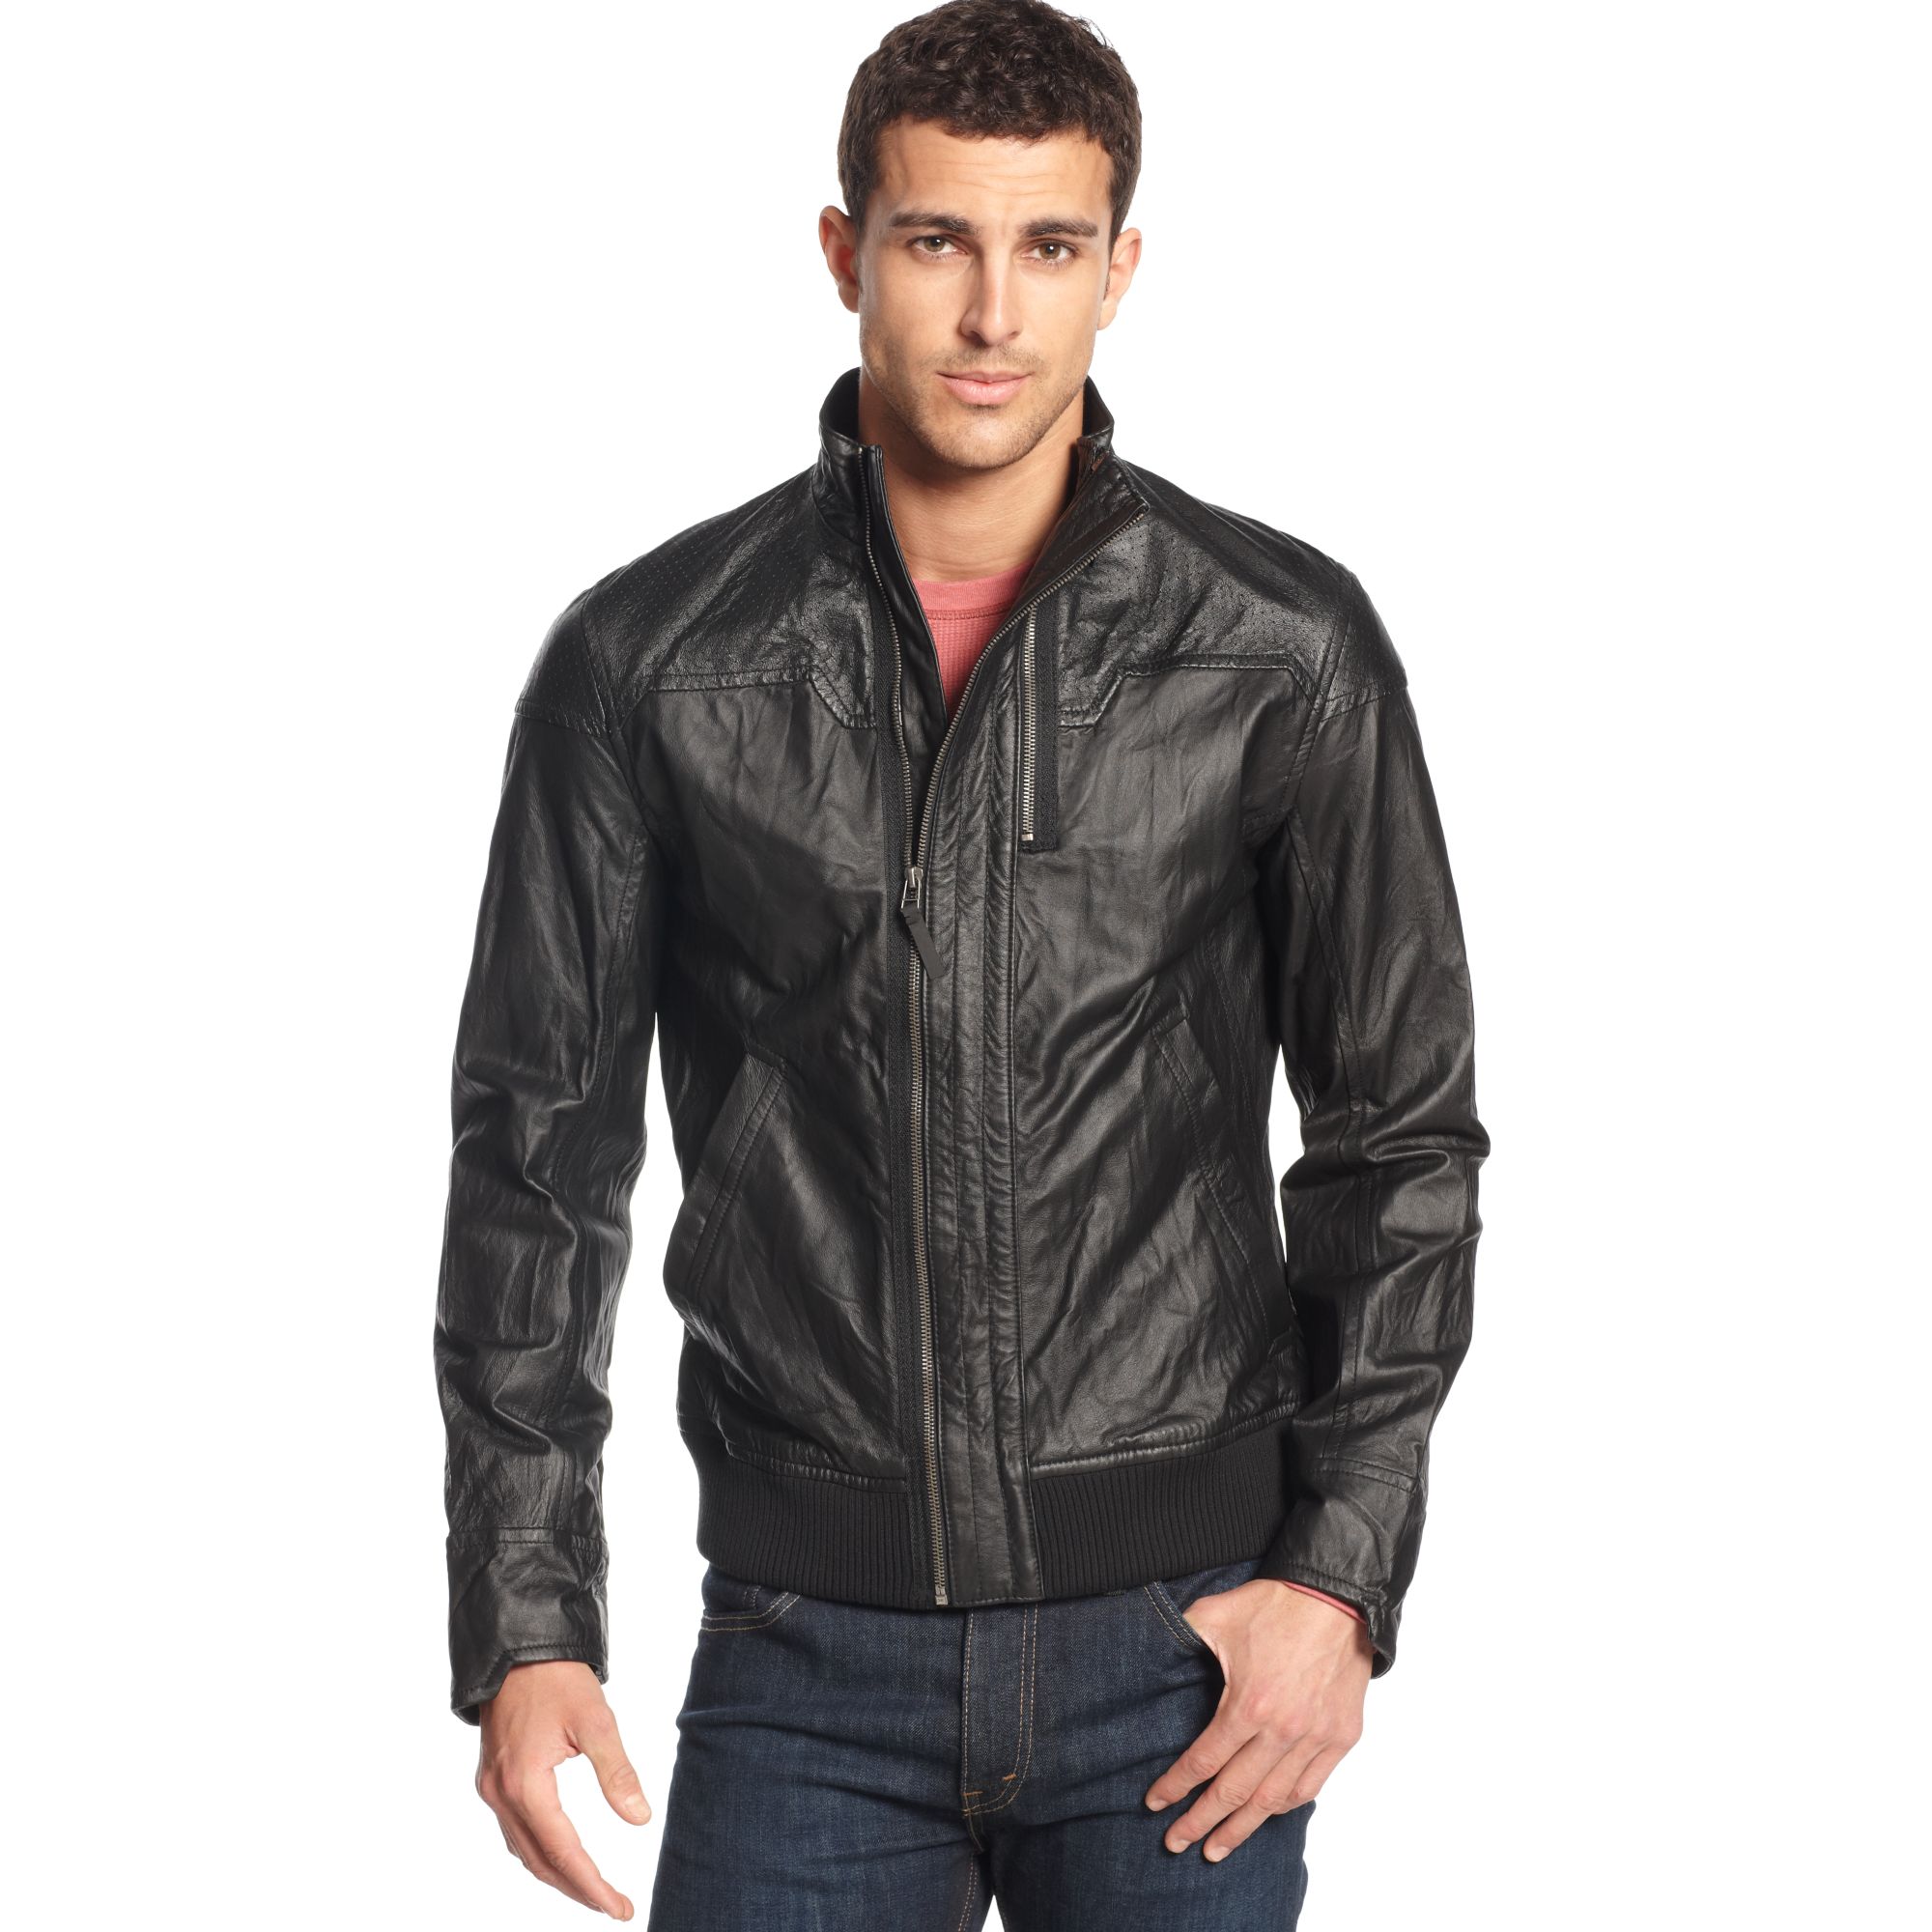 puma ferrari leather jacket Off 69% - sirinscrochet.com